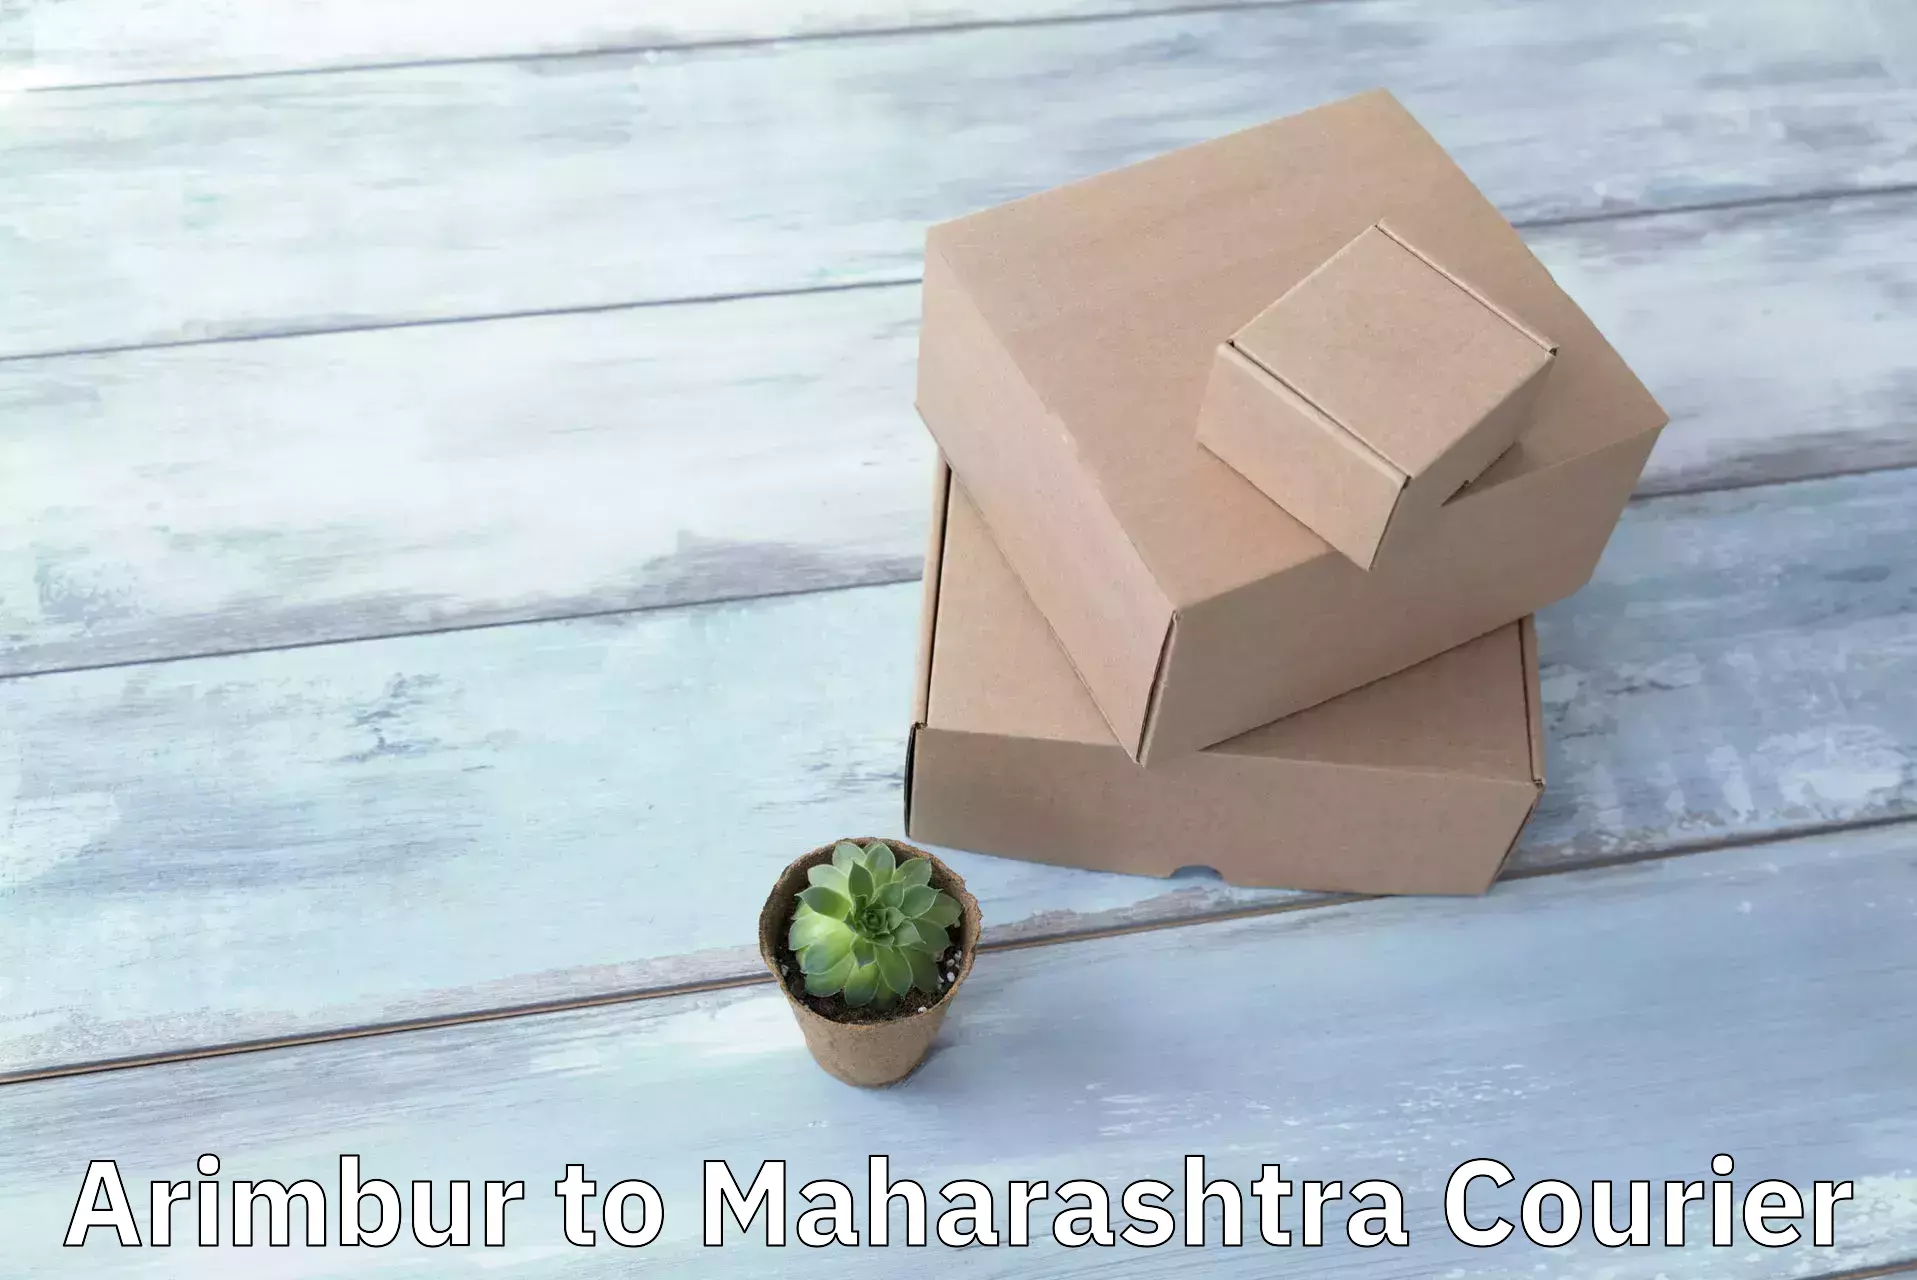 Courier service partnerships Arimbur to Maharashtra